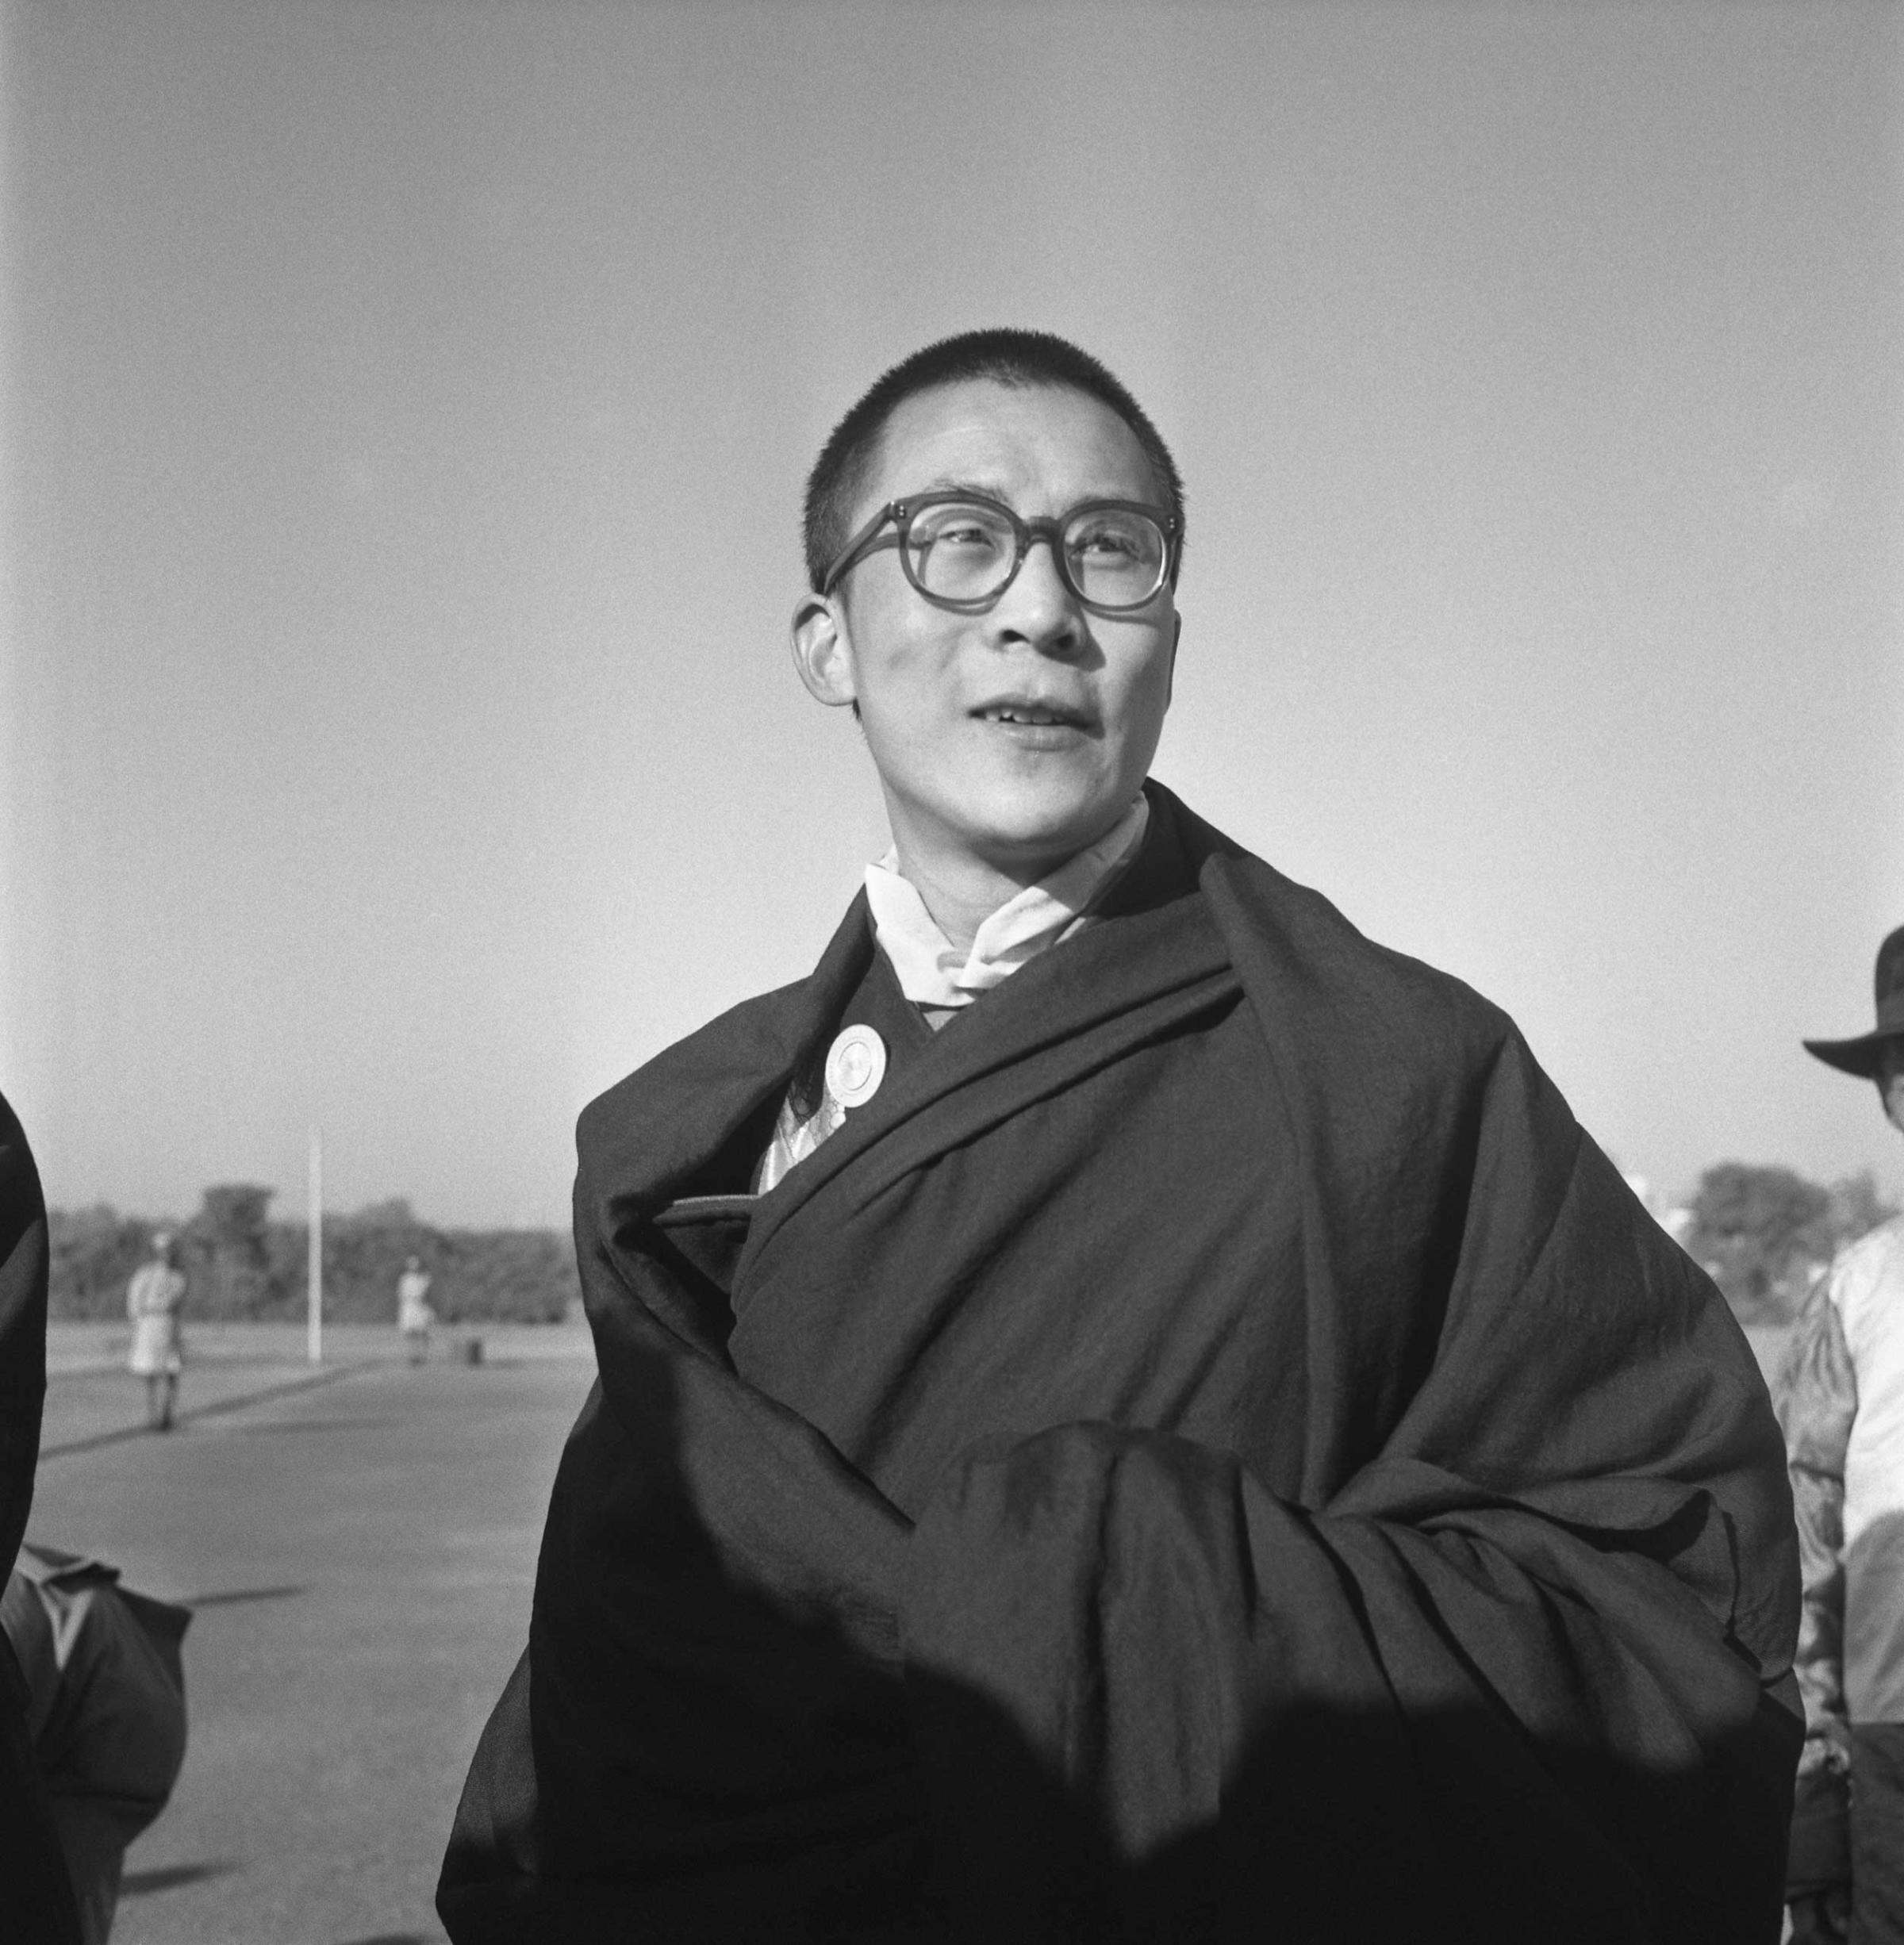 The Dalai Lama in India circa 1965.